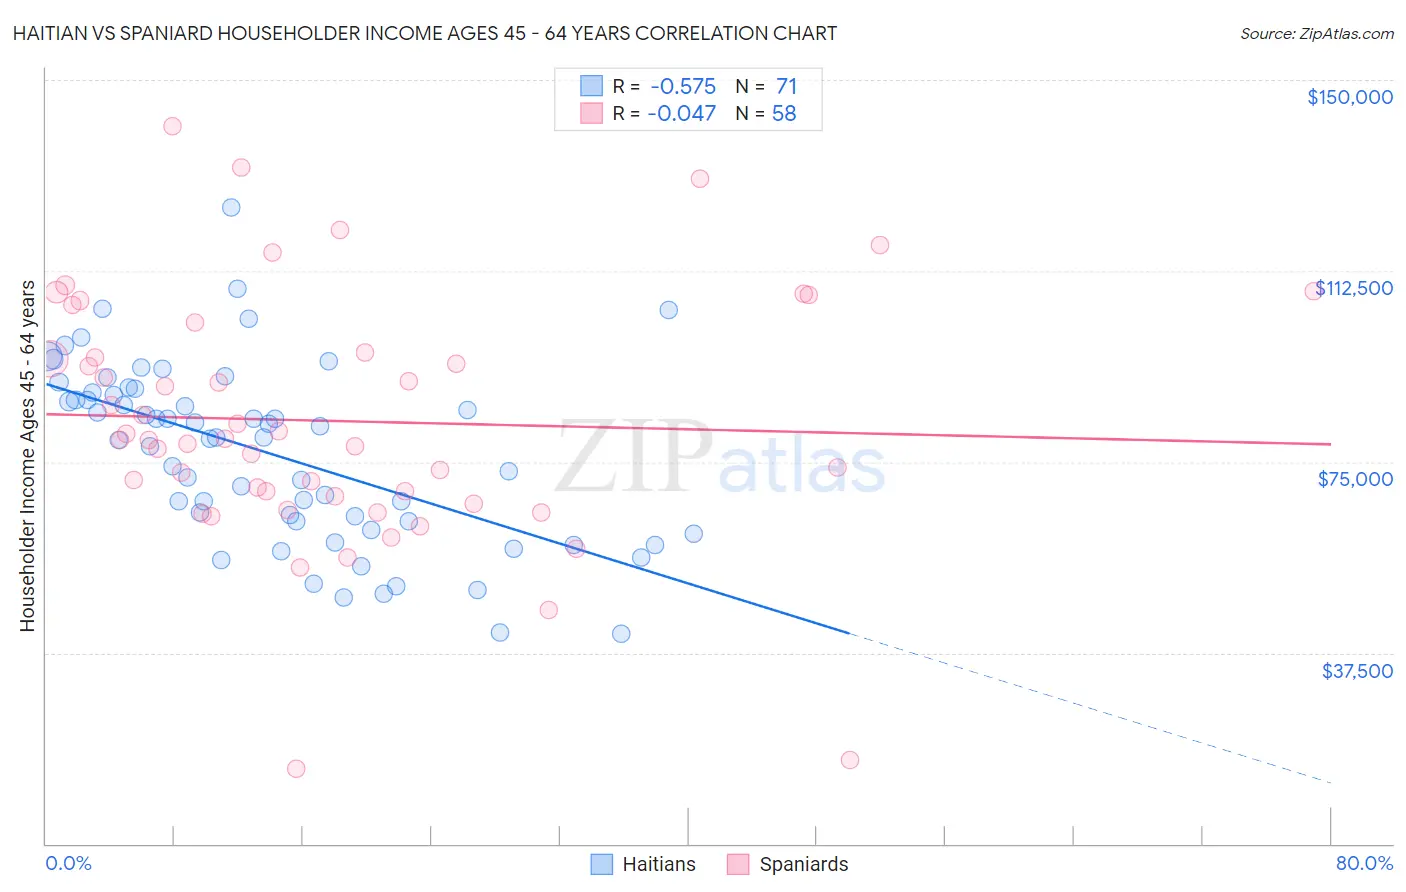 Haitian vs Spaniard Householder Income Ages 45 - 64 years